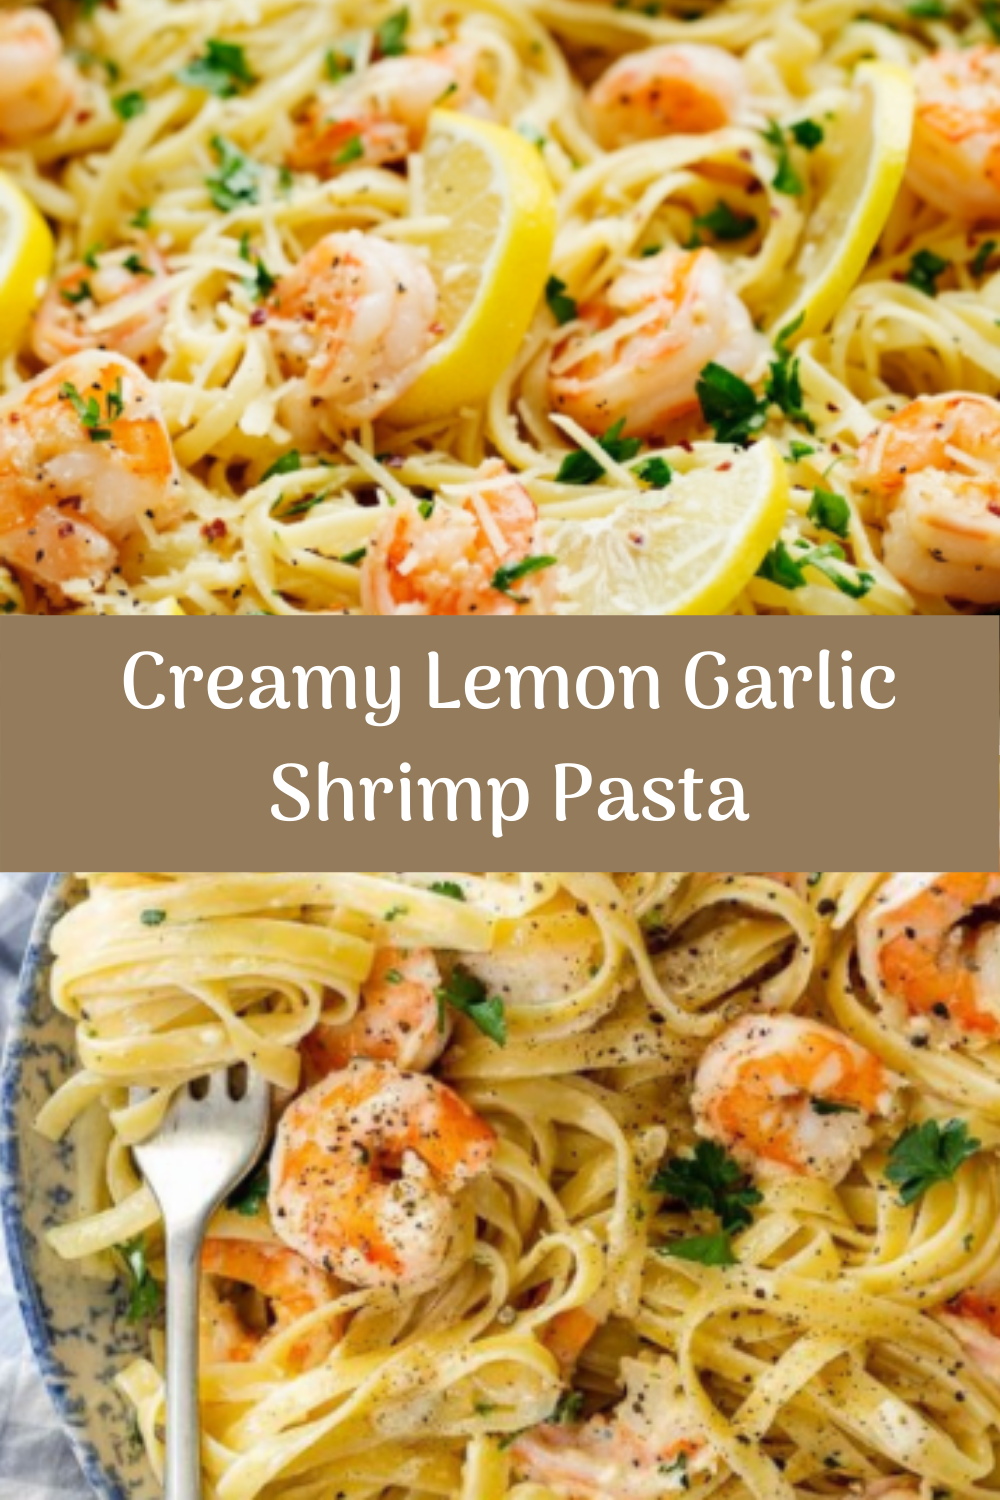 Creamy Lemon Garlic Shrimp Pasta